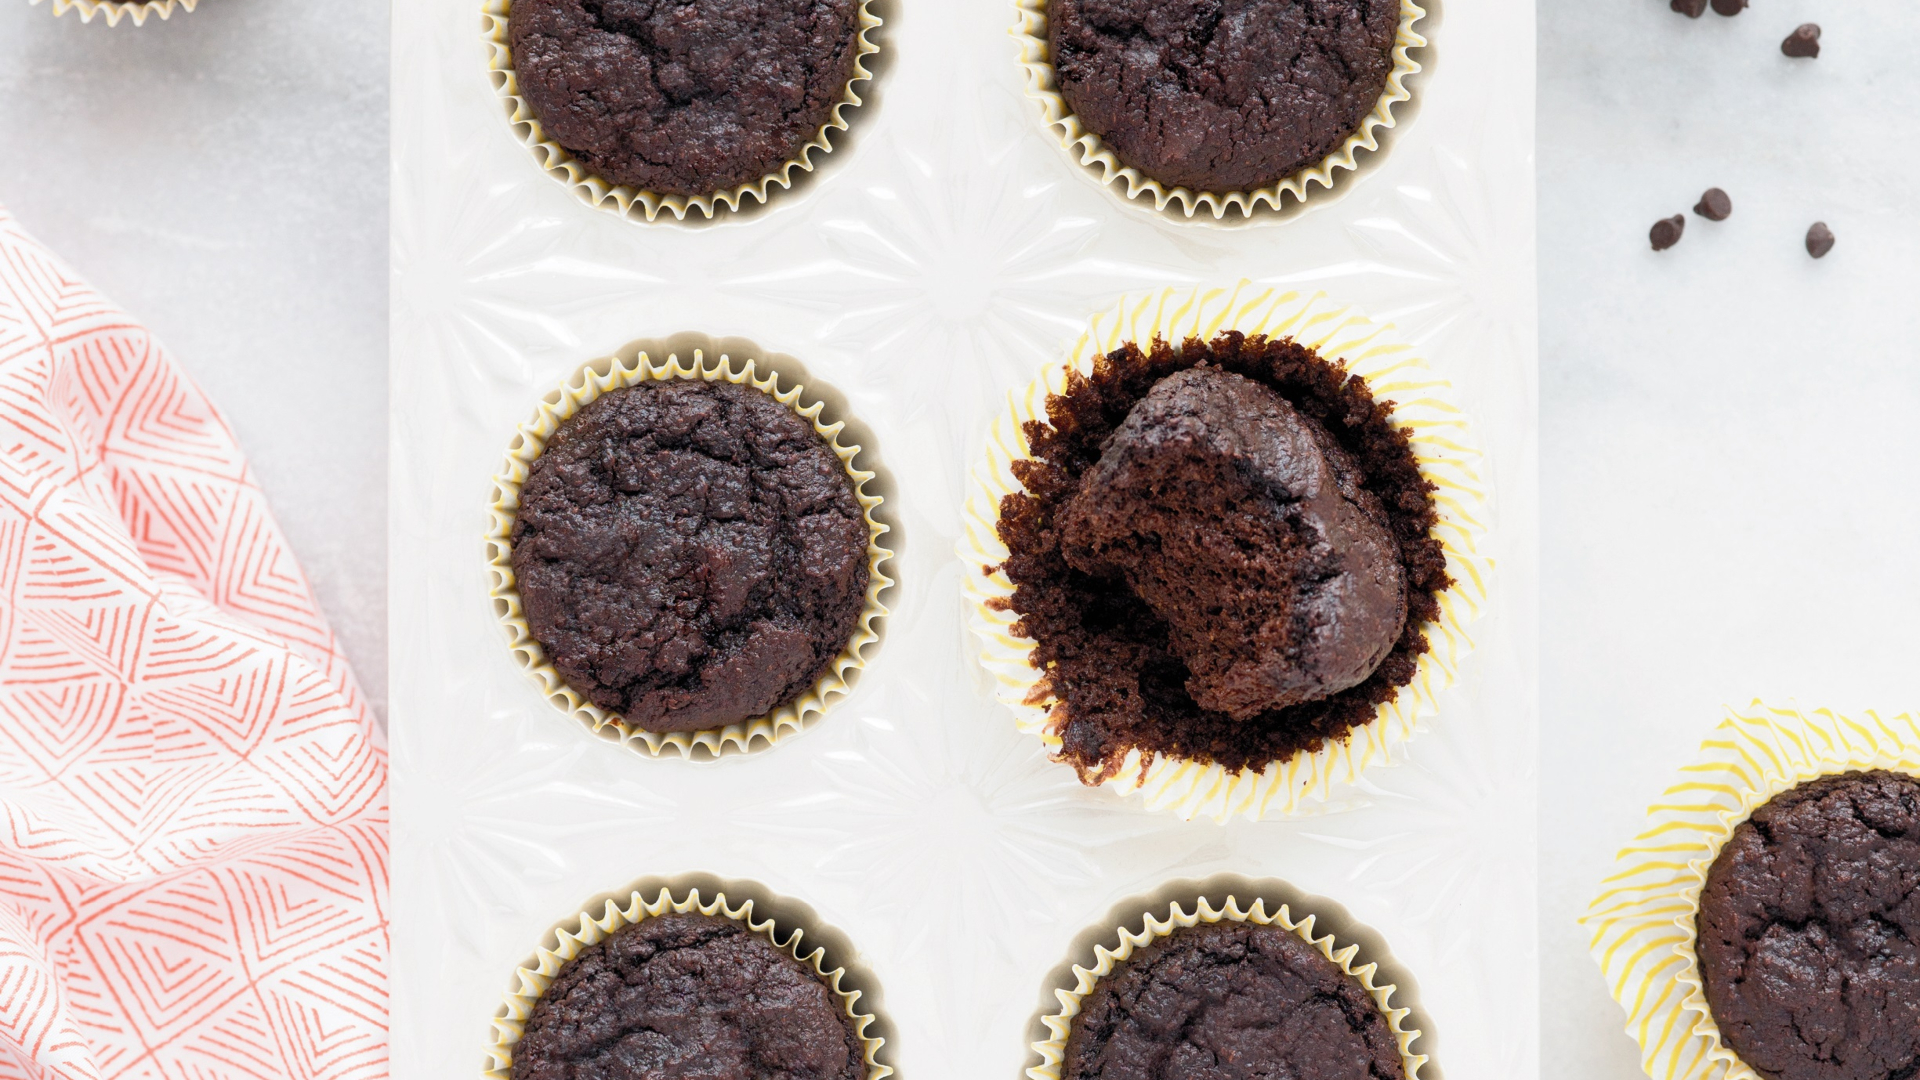 Beet quinoa chocolate cupcakes